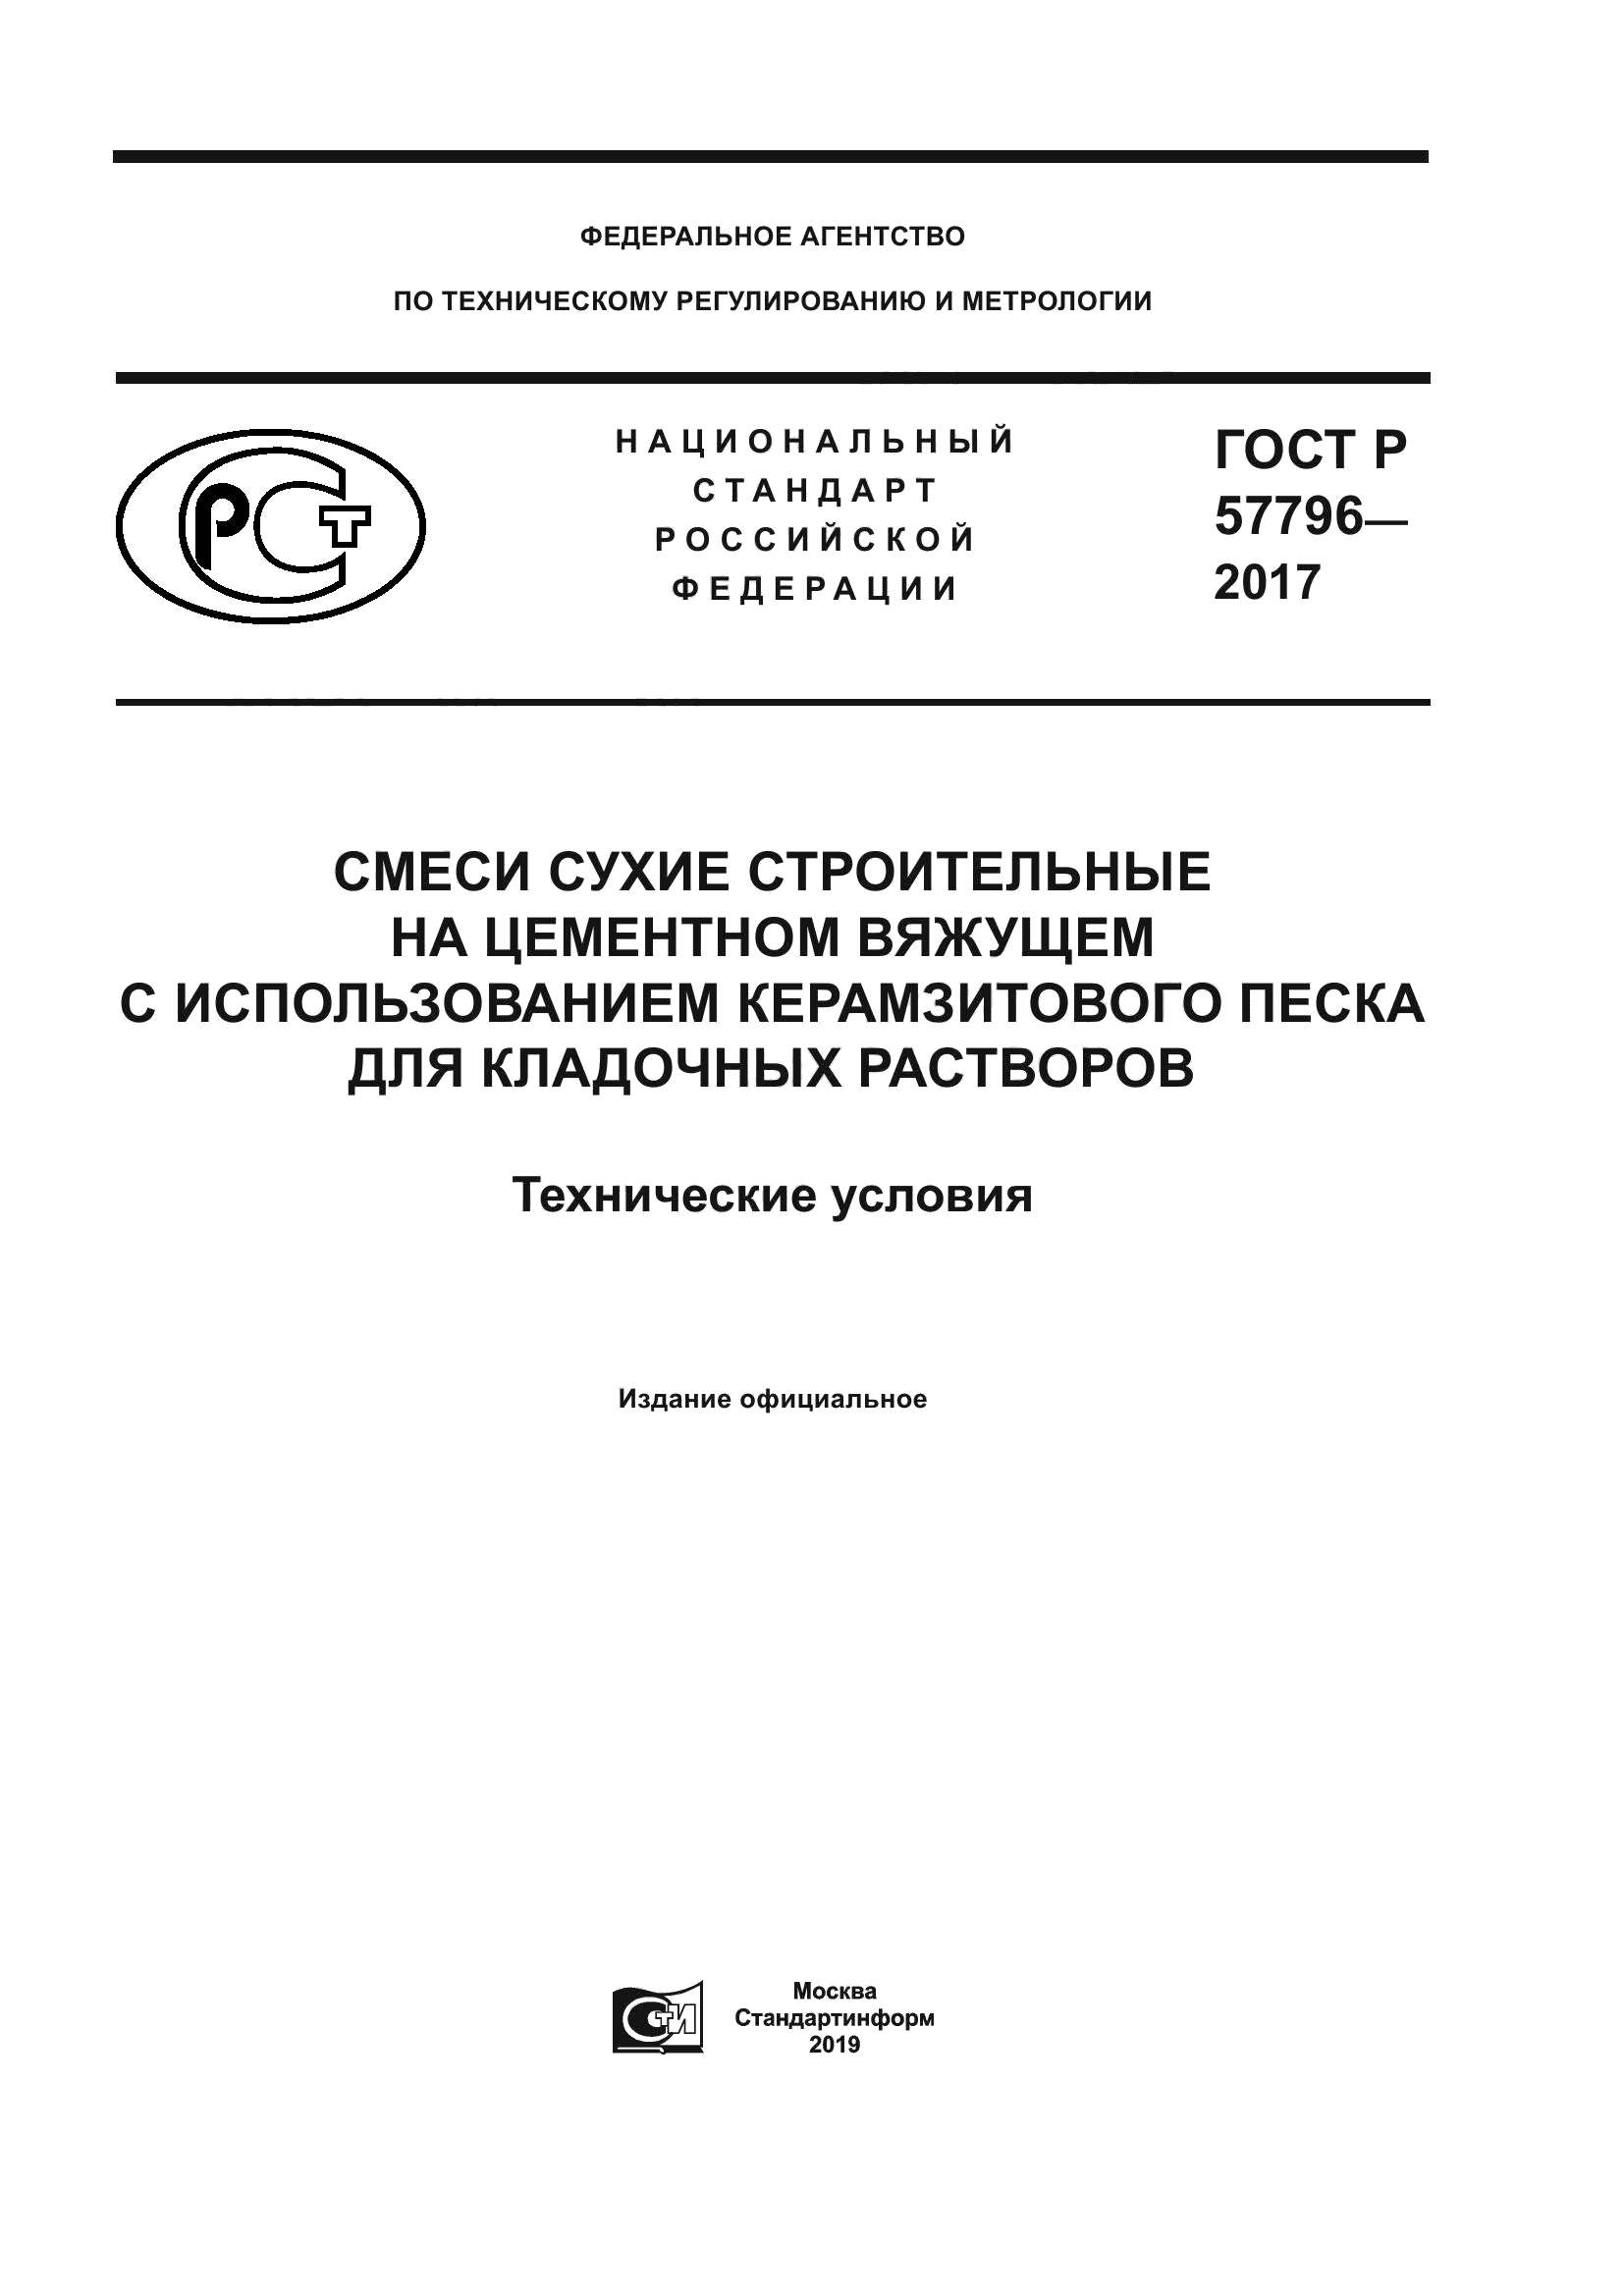 ГОСТ Р 57796-2017